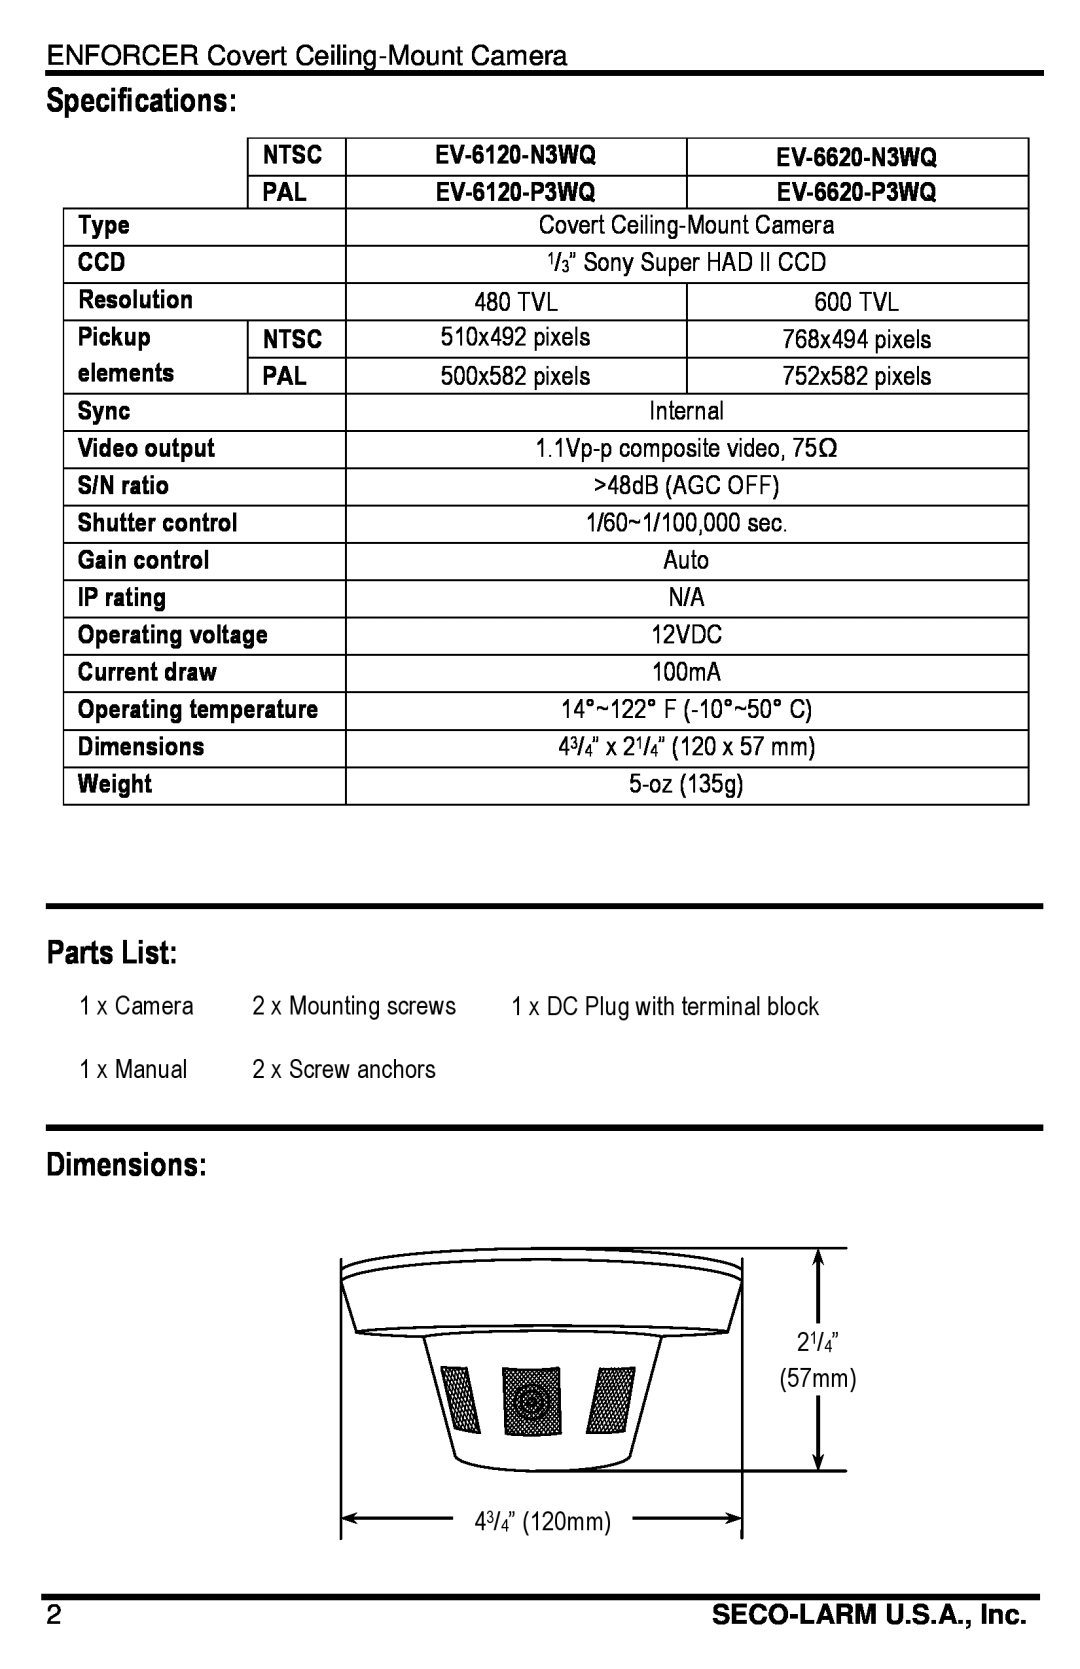 SECO-LARM USA EV-6620-P3WQ manual Specifications, Parts List, Dimensions, ENFORCER Covert Ceiling-Mount Camera, x Camera 